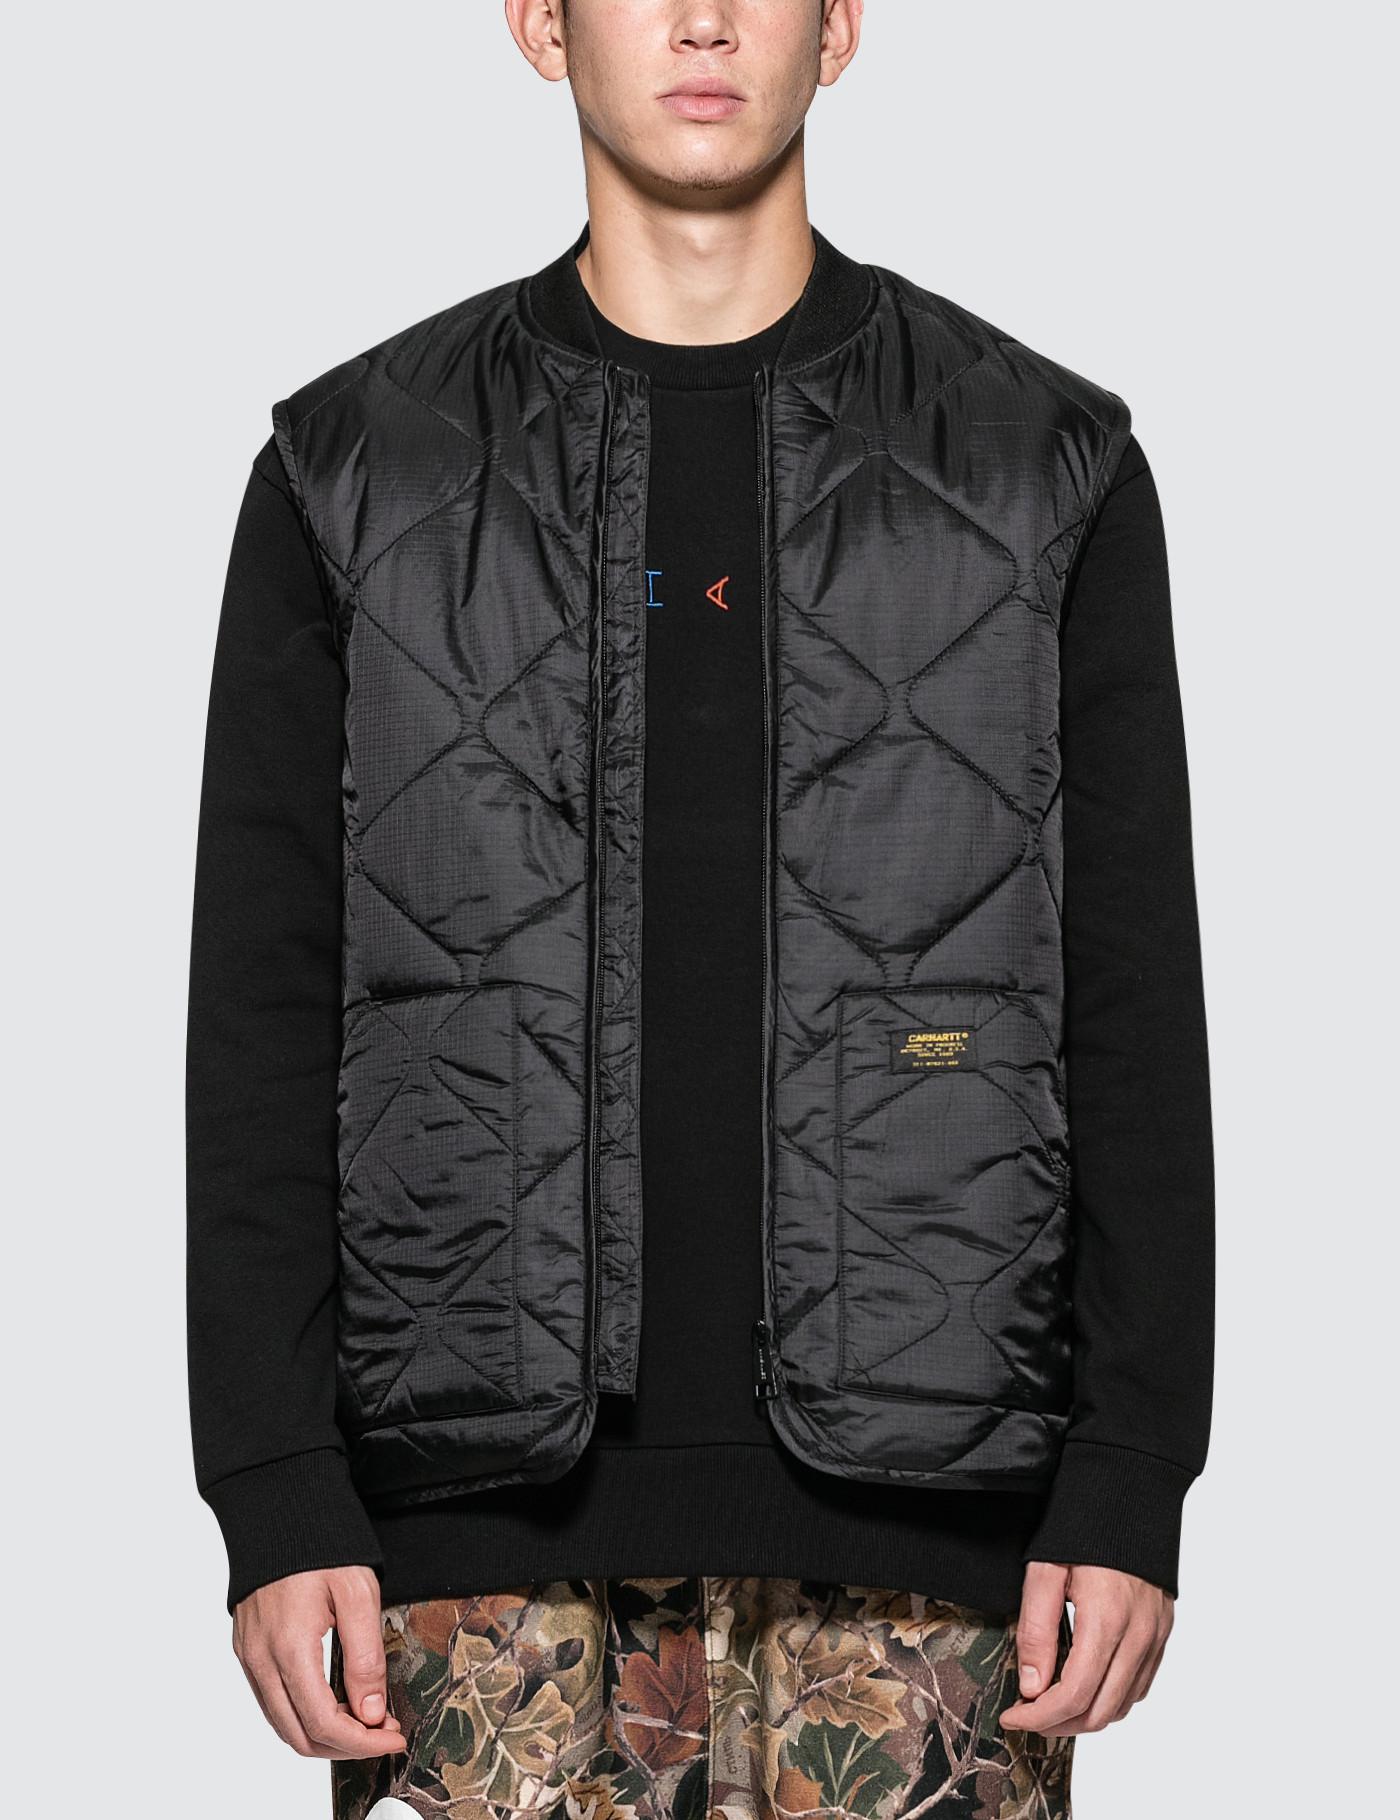 Carhartt WIP Synthetic Newton Vest Liner Jacket in Black for Men - Lyst